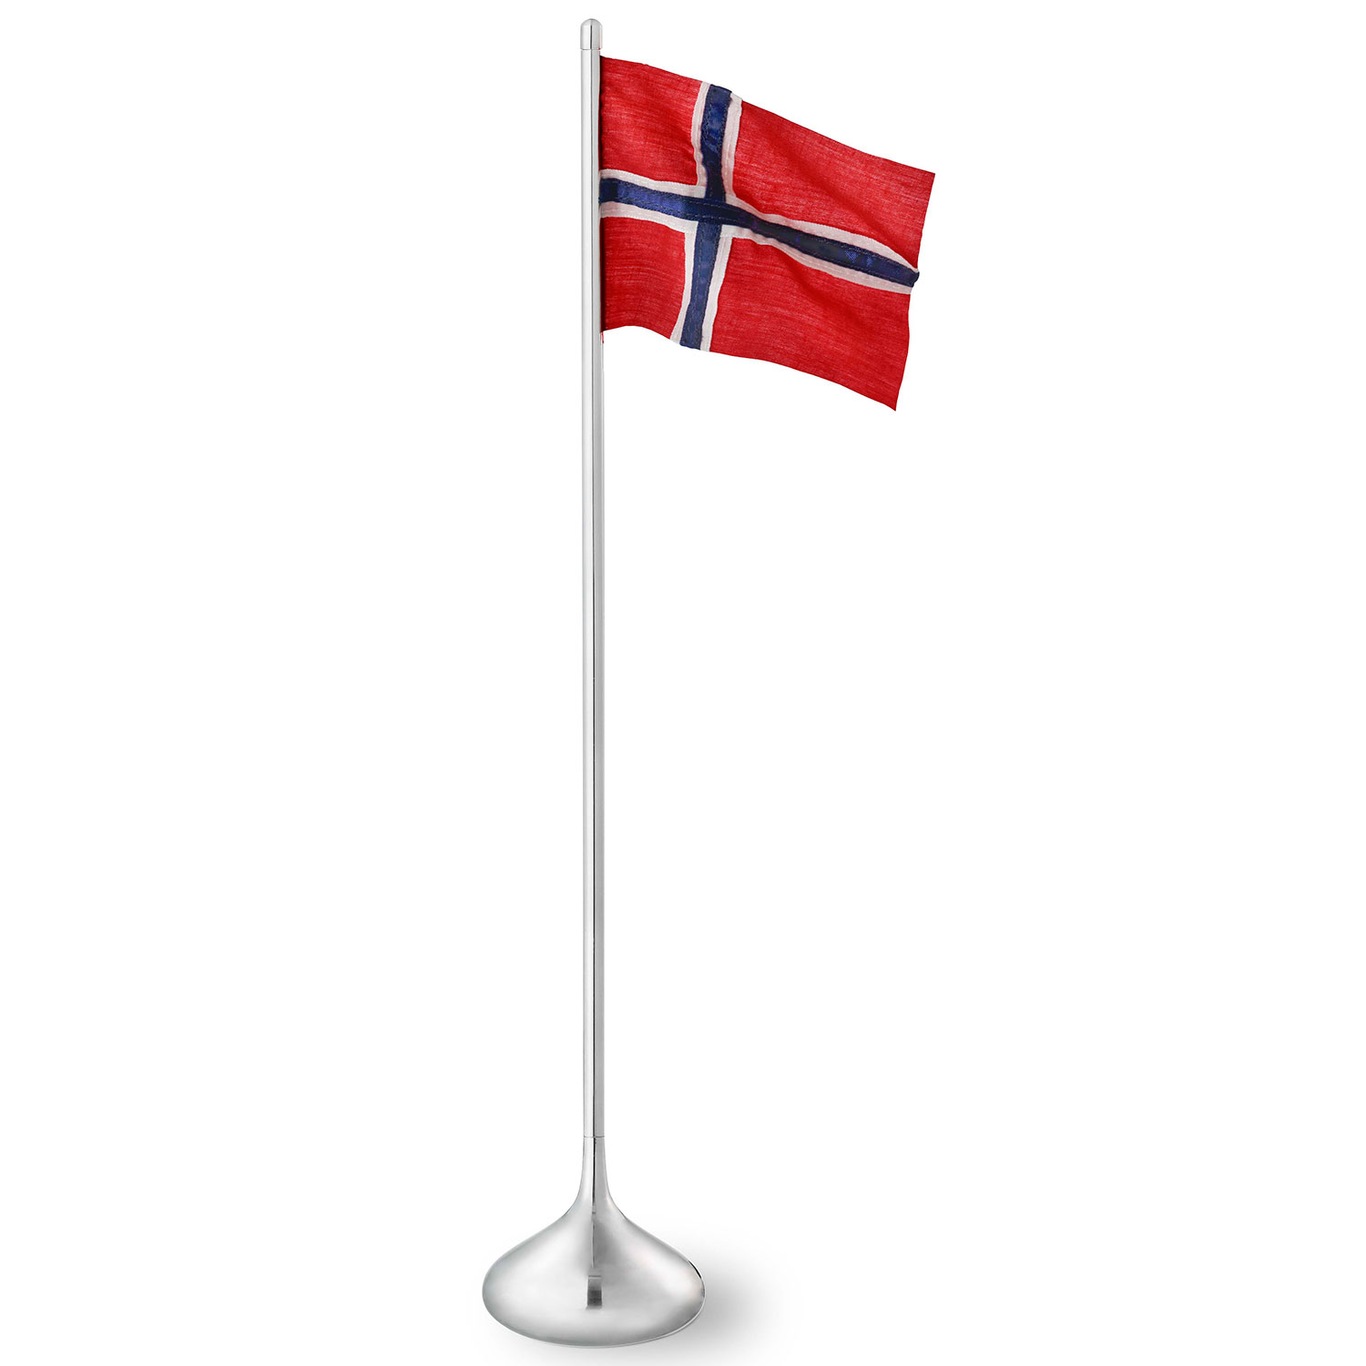 Bordflag Norway